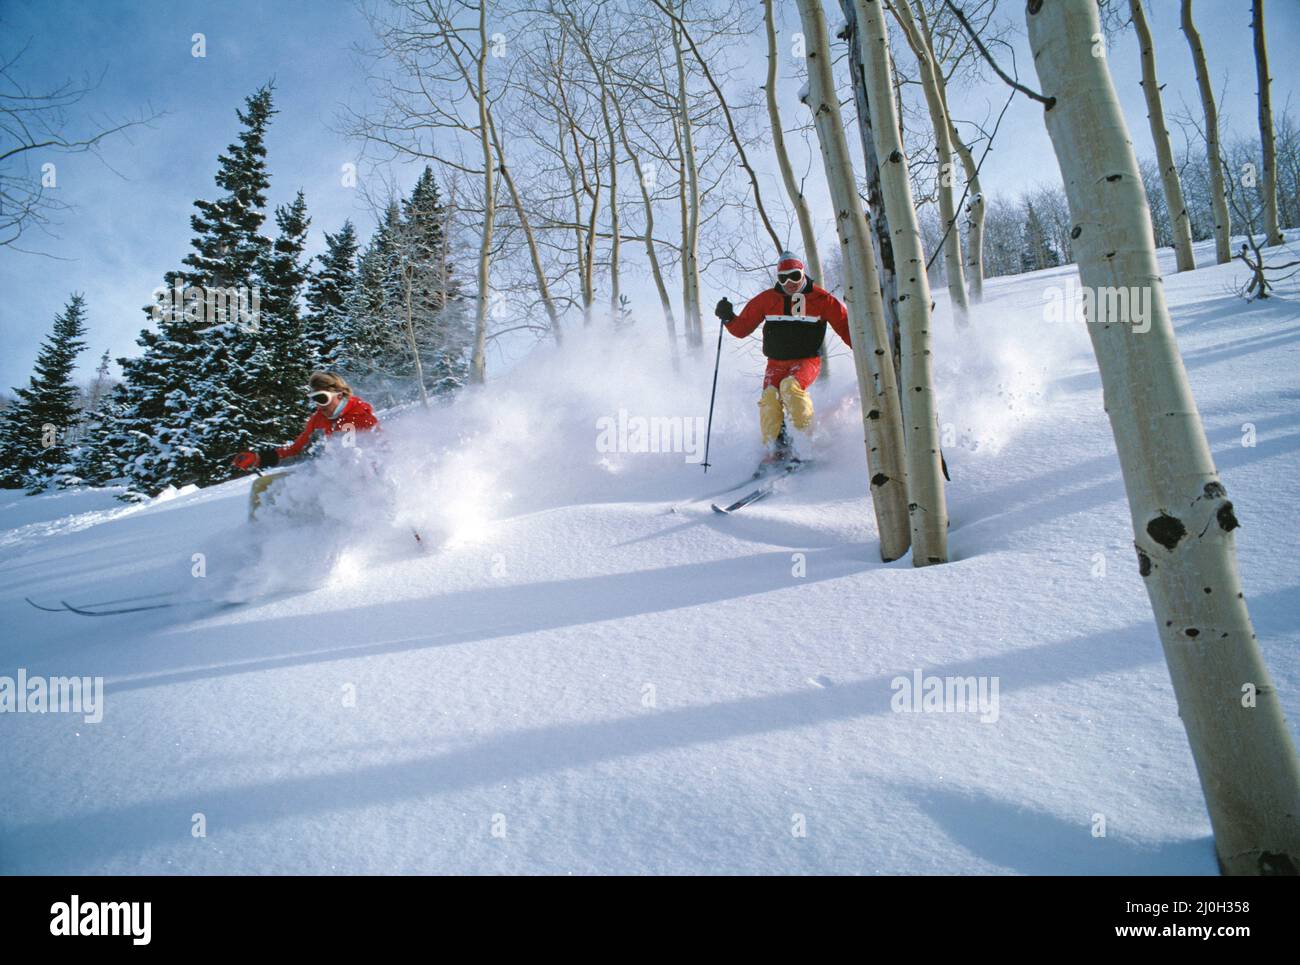 USA. Utah. Park city. Downhill skiing between Aspen Trees. Stock Photo